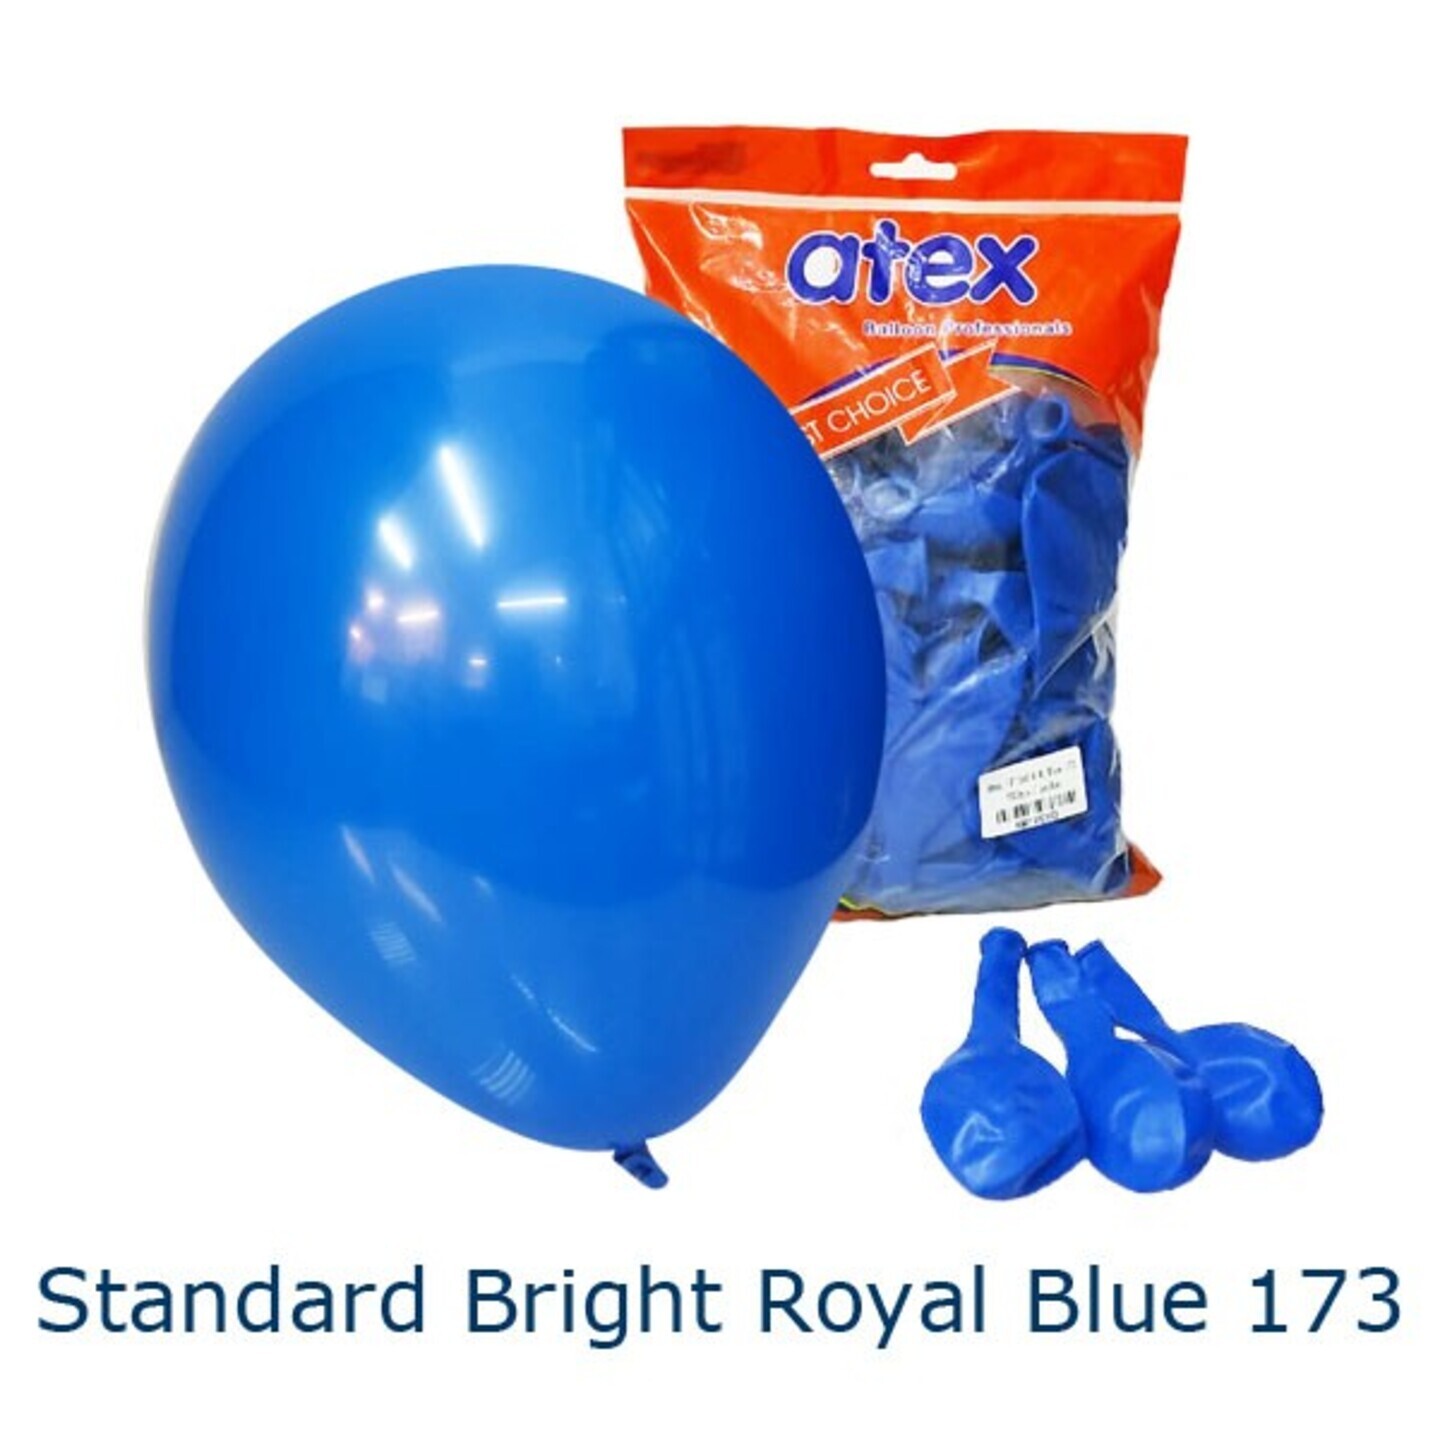 Standard Bright Royal Blue 173